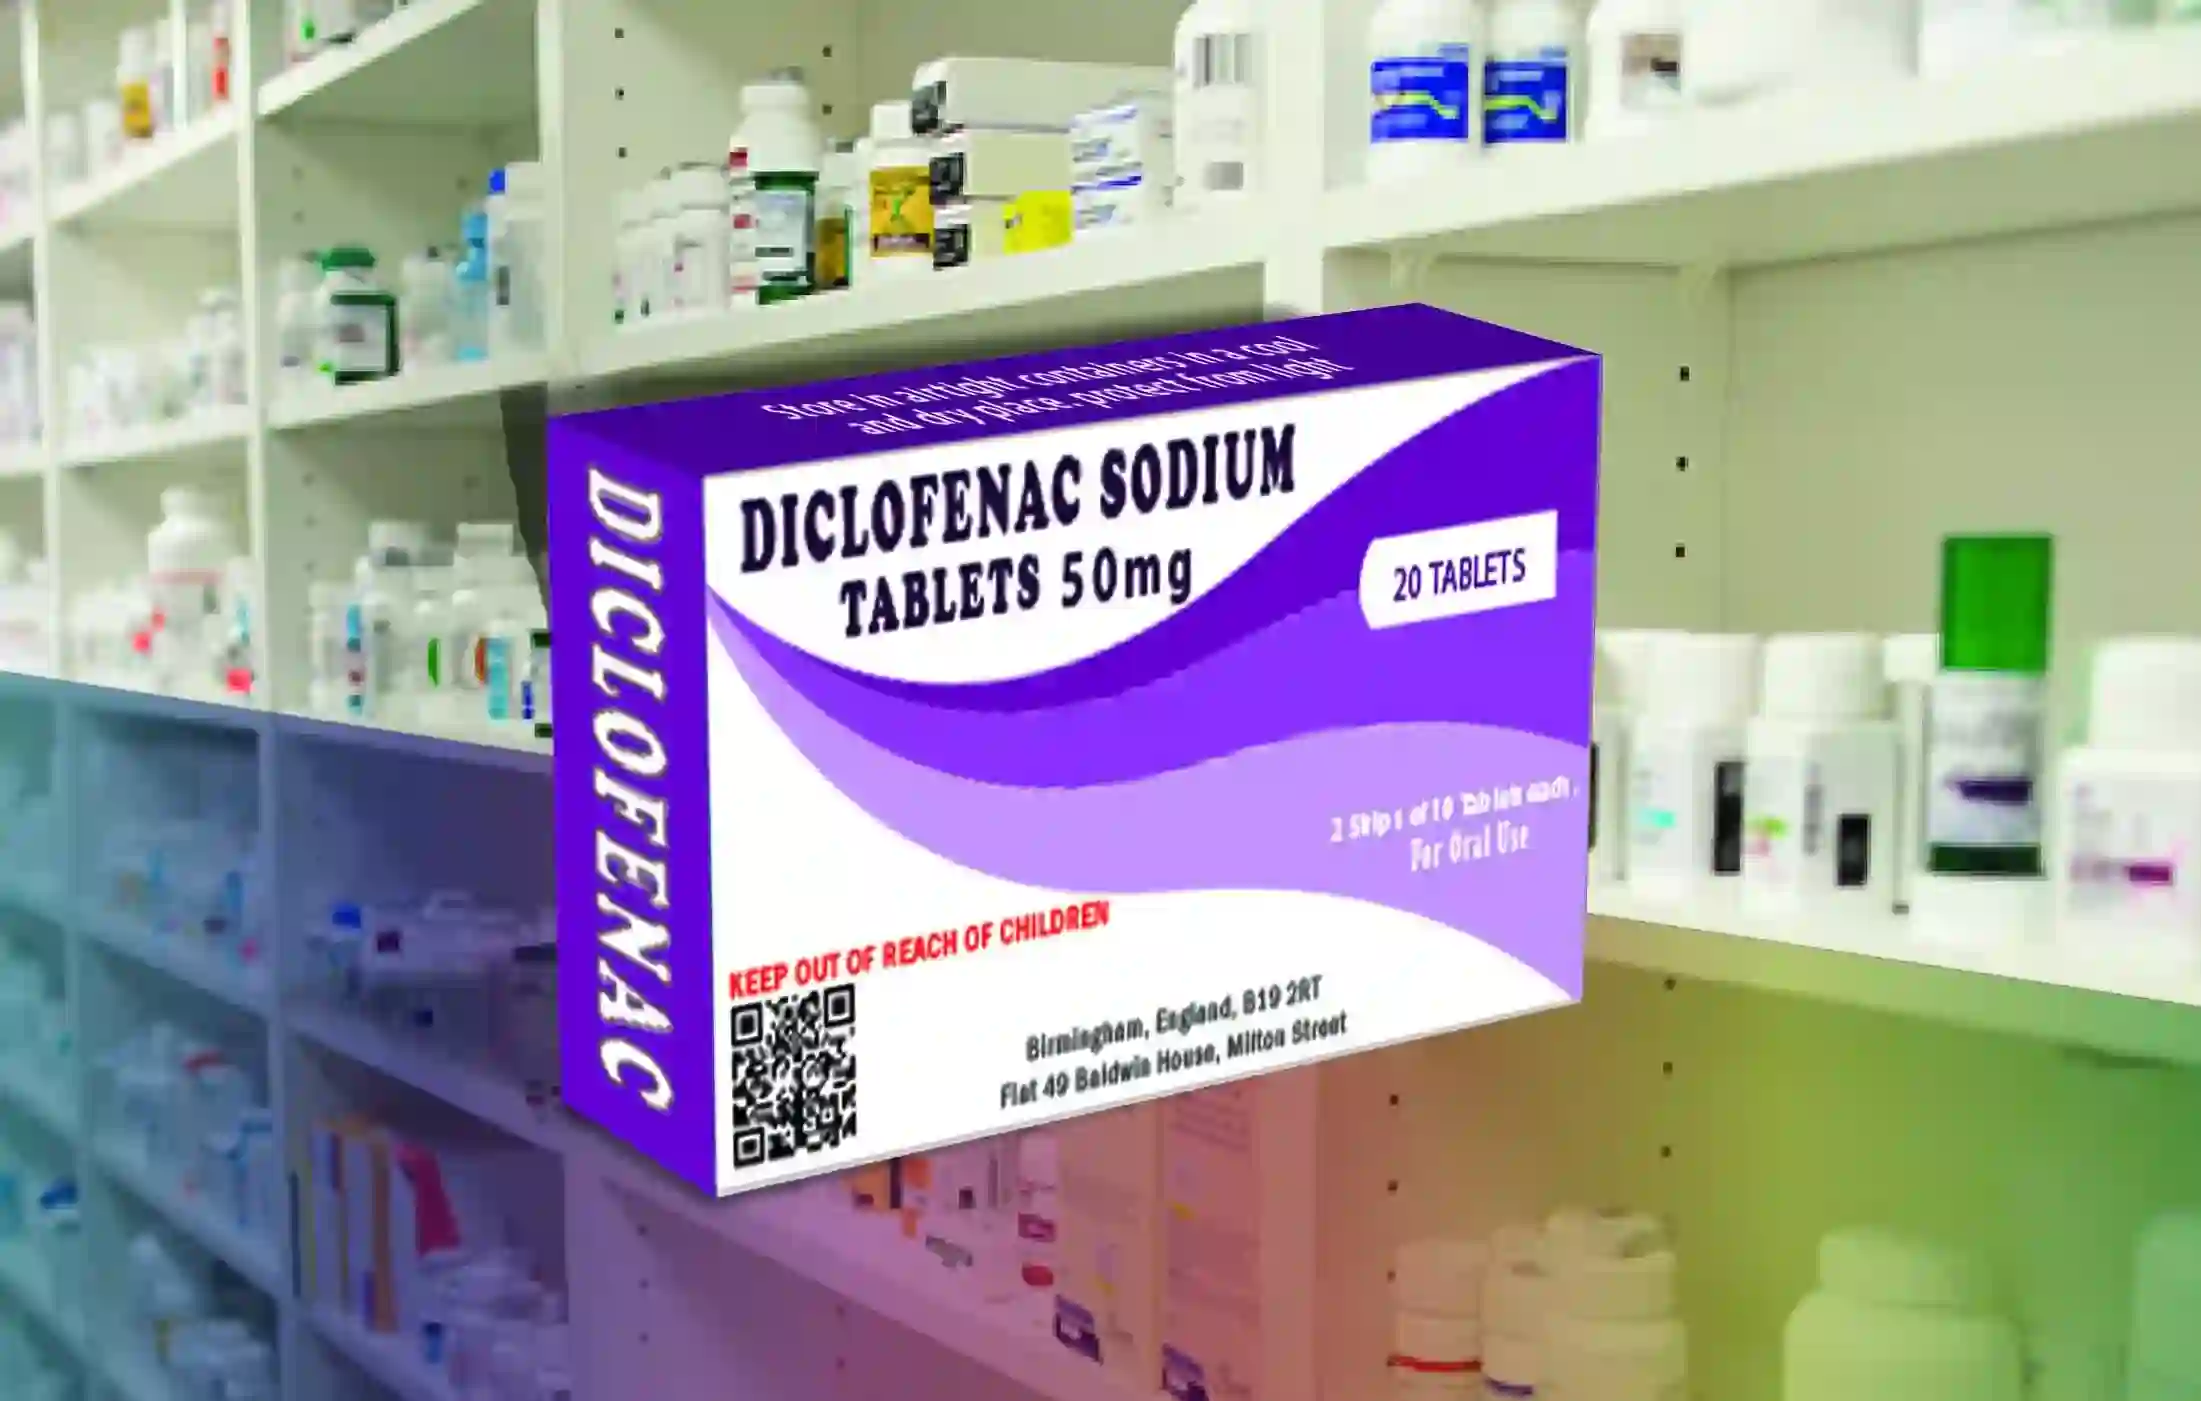 'diclofenac tablets', 'diclofenac 50mg tablets', 'analgesic tablets', 'analgesic'